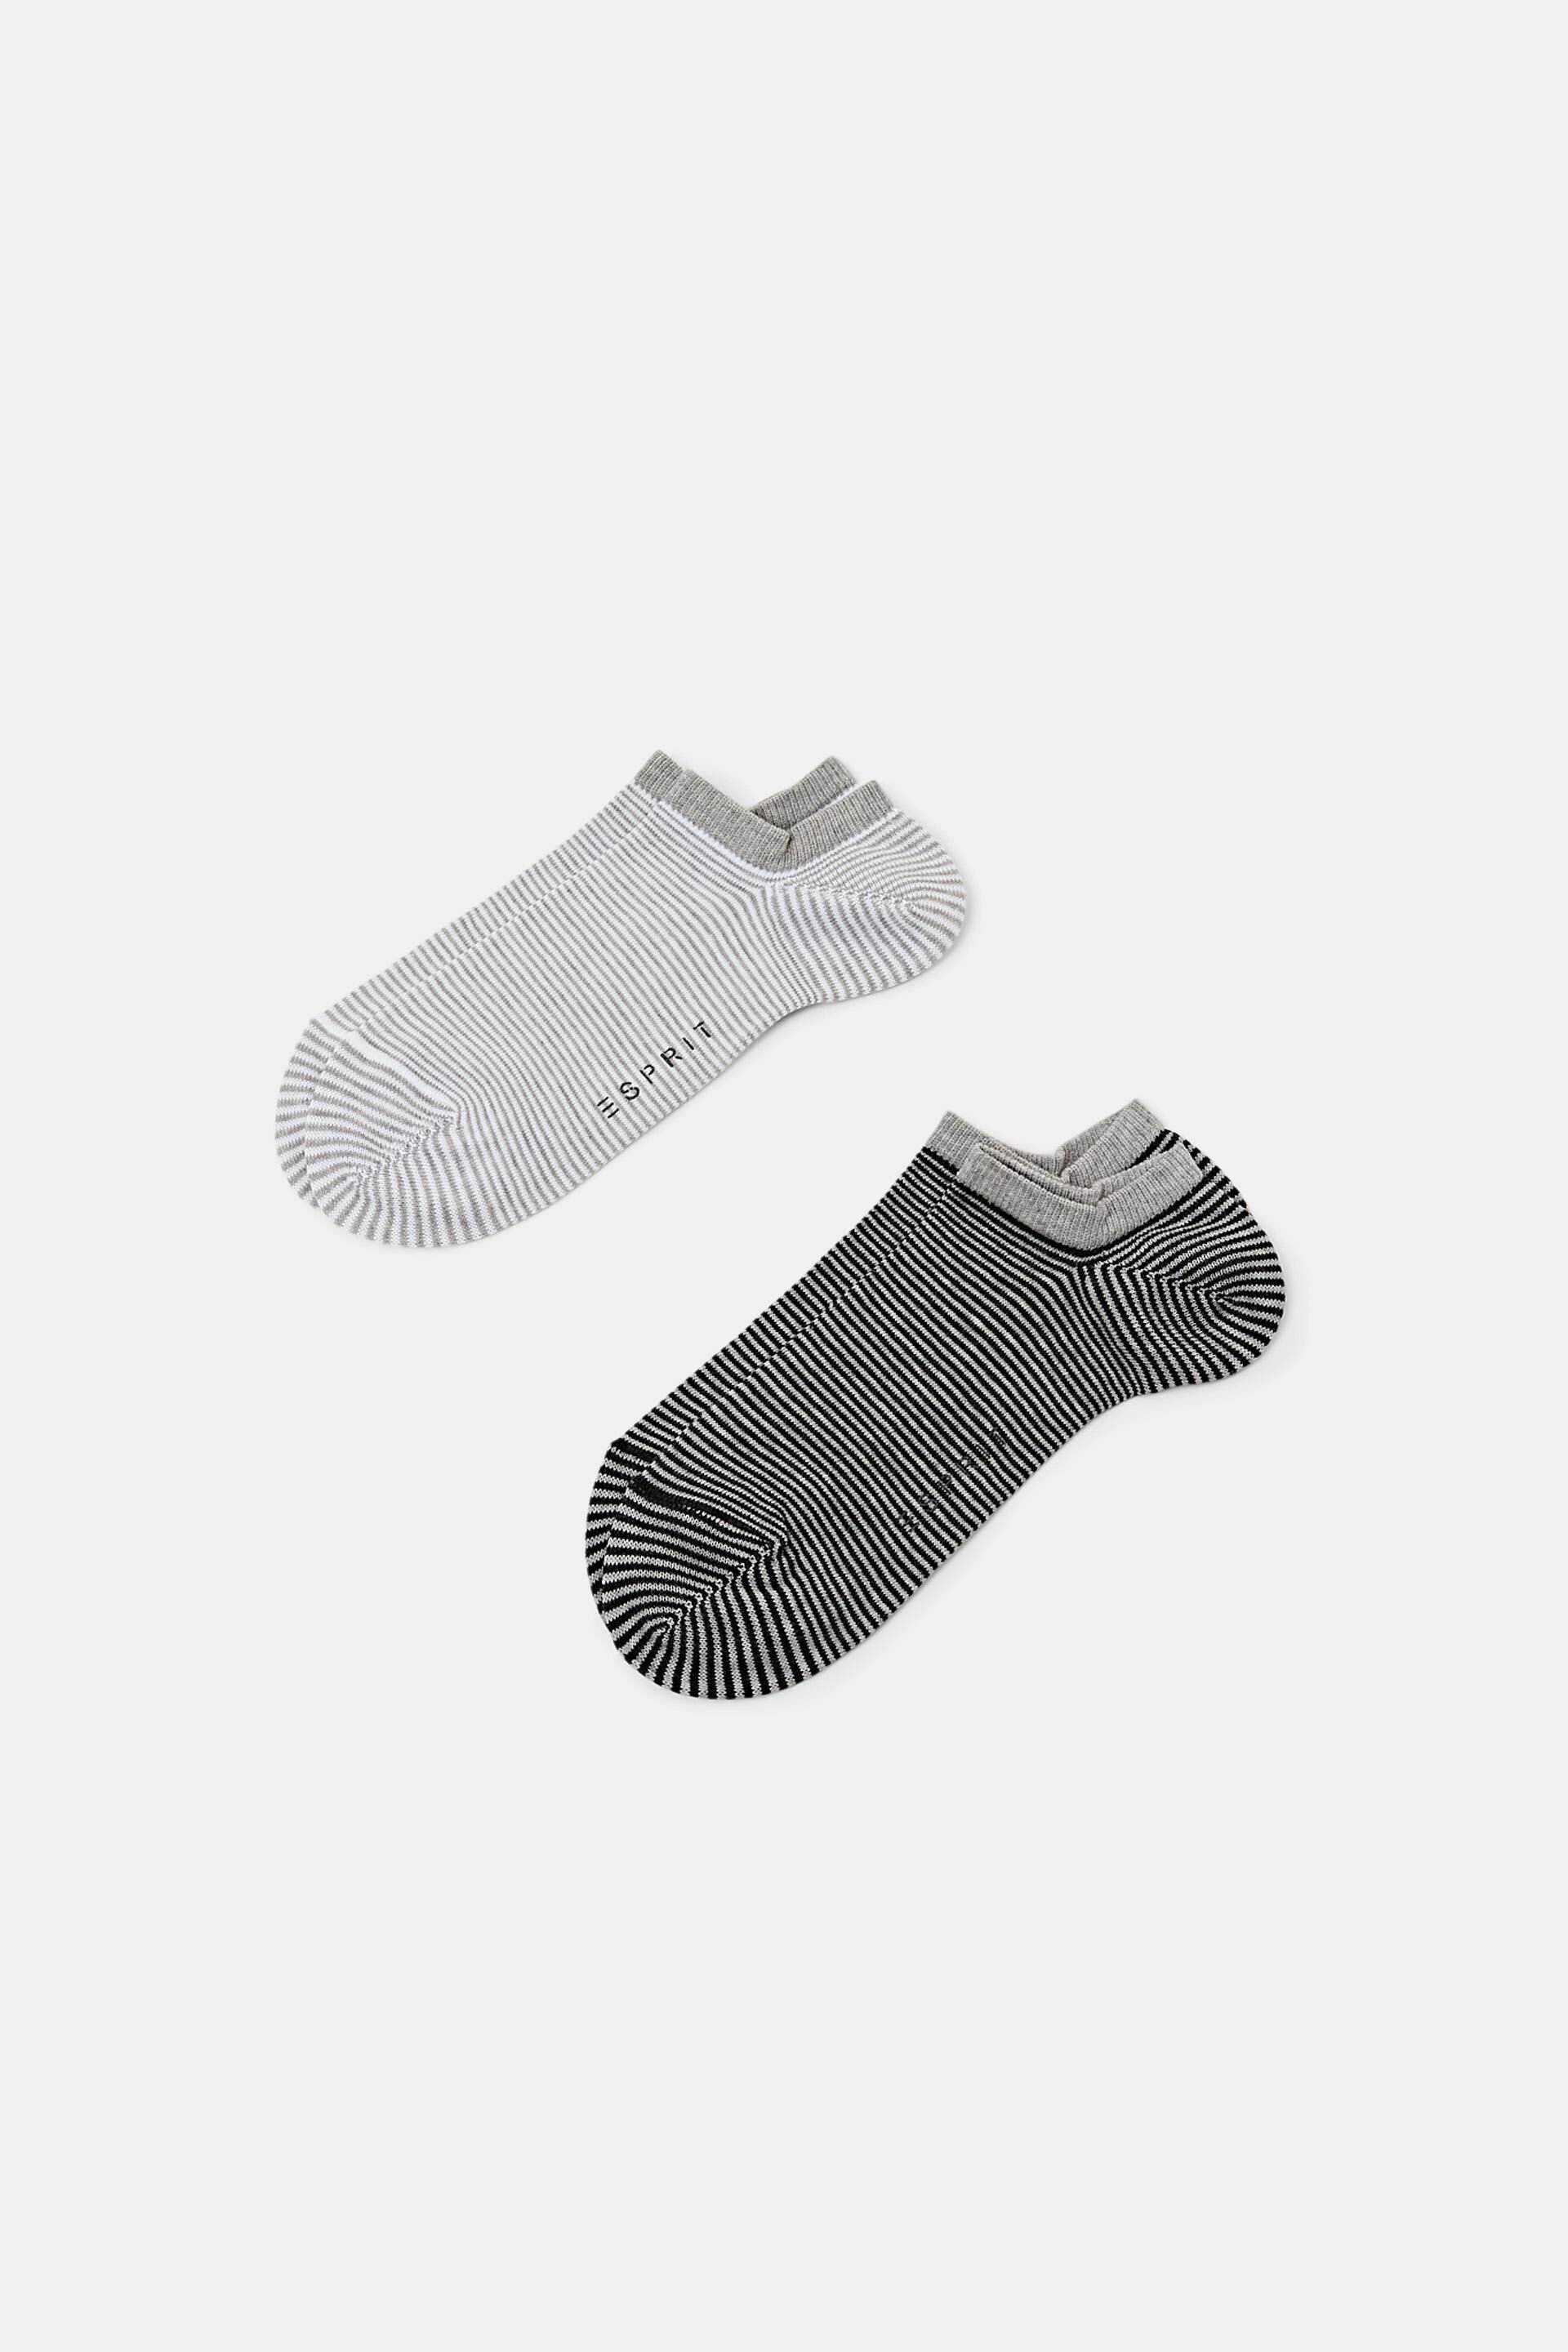 Esprit 2-pack cotton organic socks, sneaker